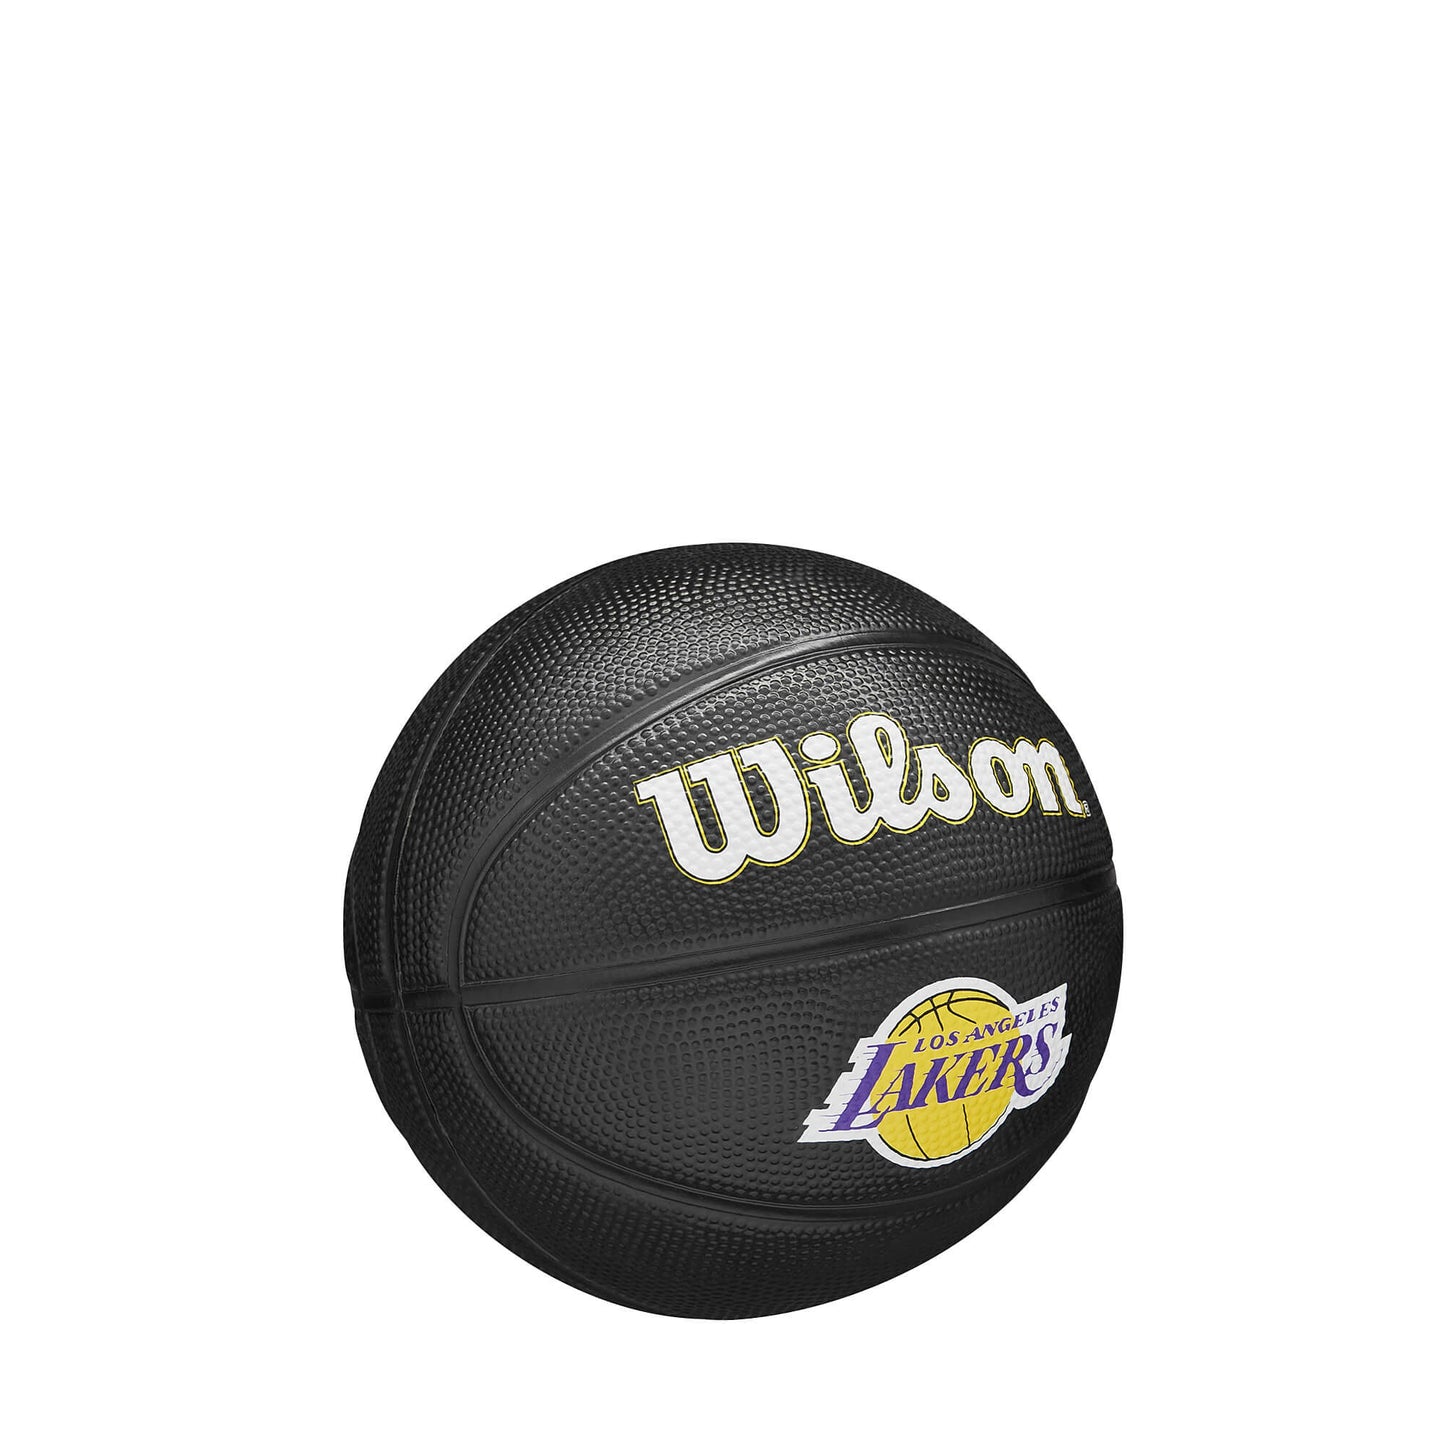 Wilson NBA Team Tribute mini Los Angeles Lakers - black (sz. 3)